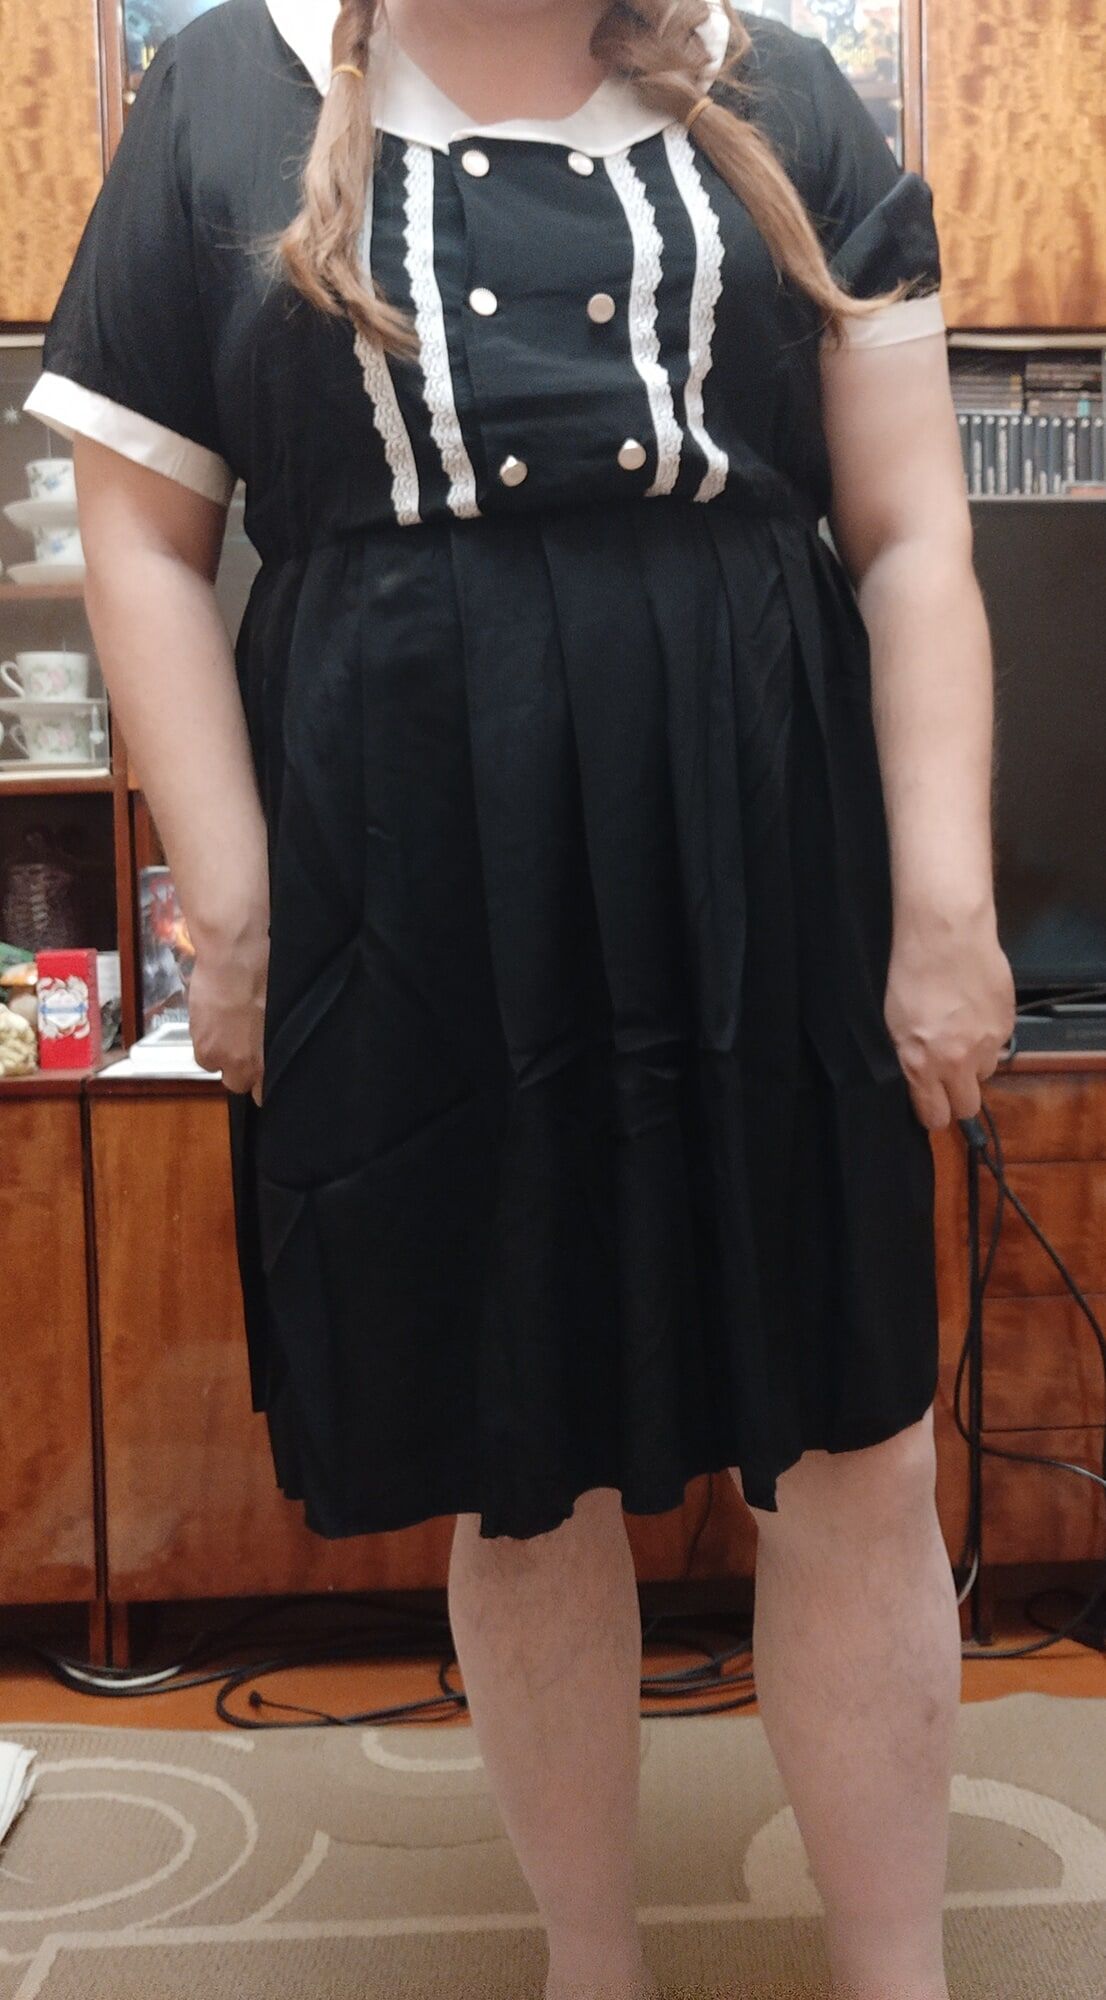 sissy Aleksa posing in new black dress